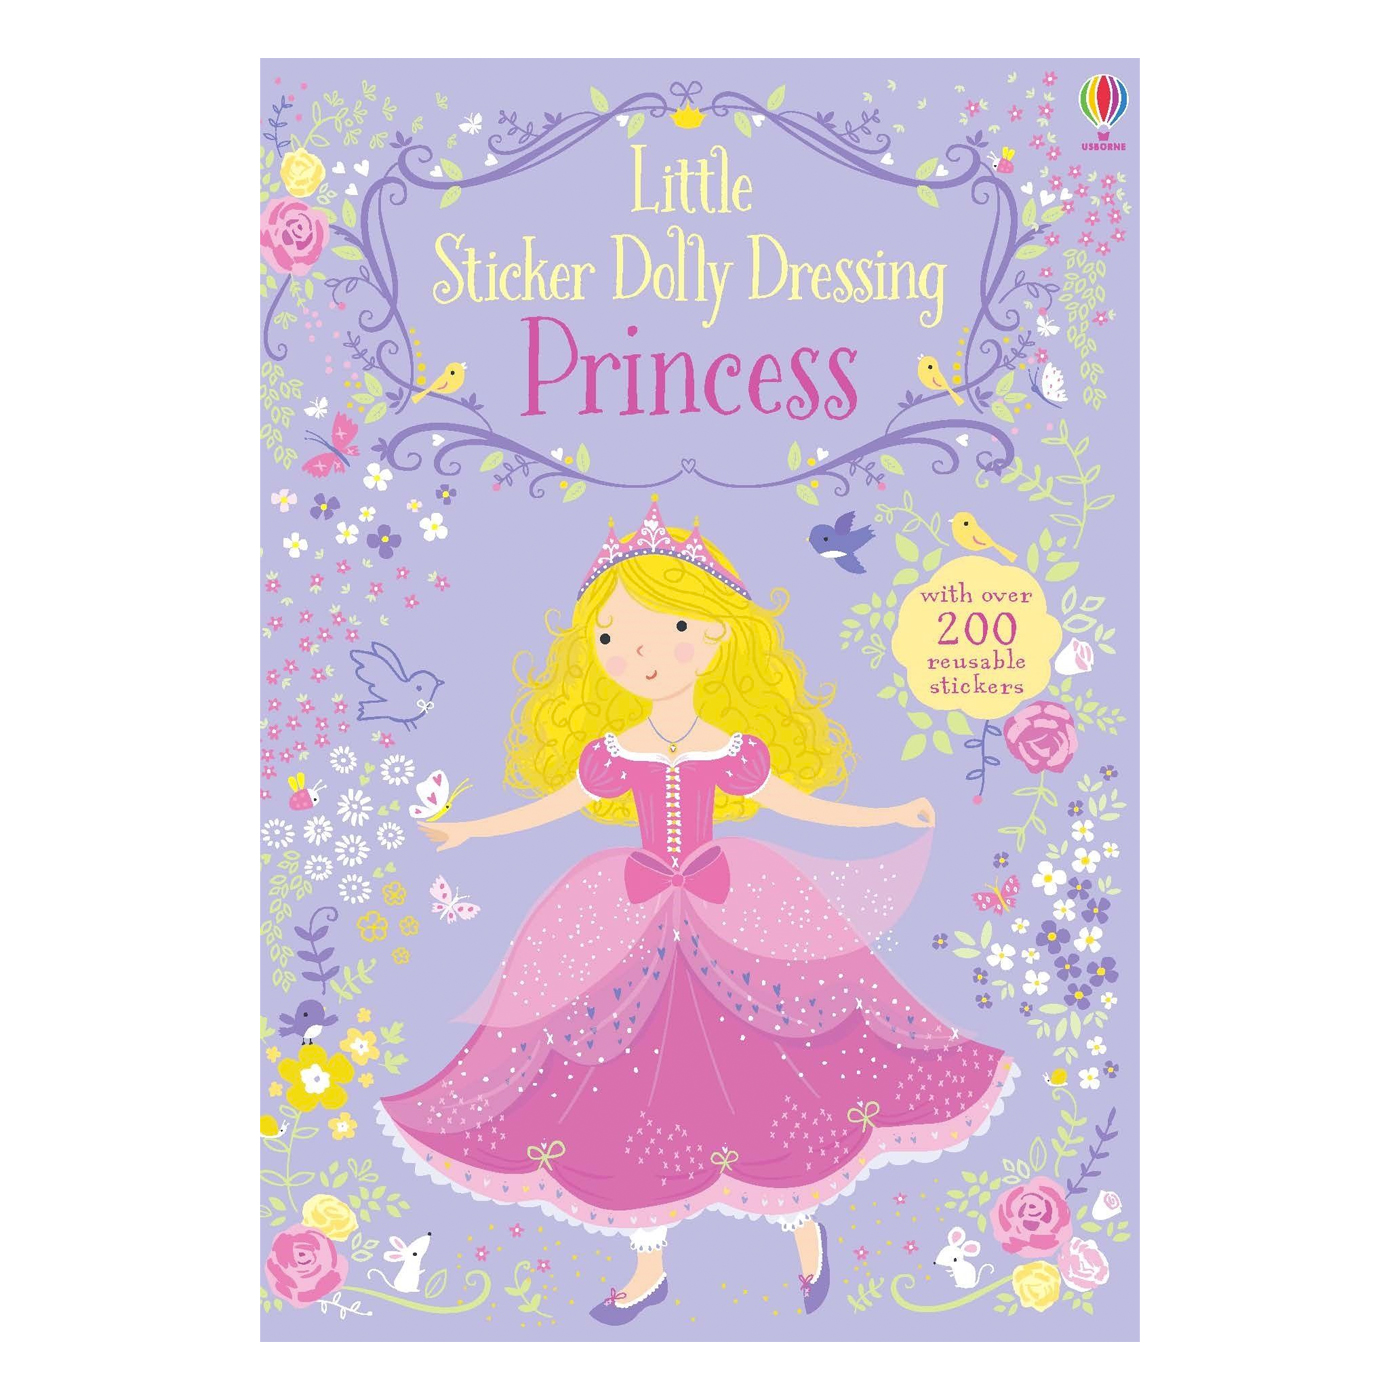  Little Sticker Dolly Dressing Princess